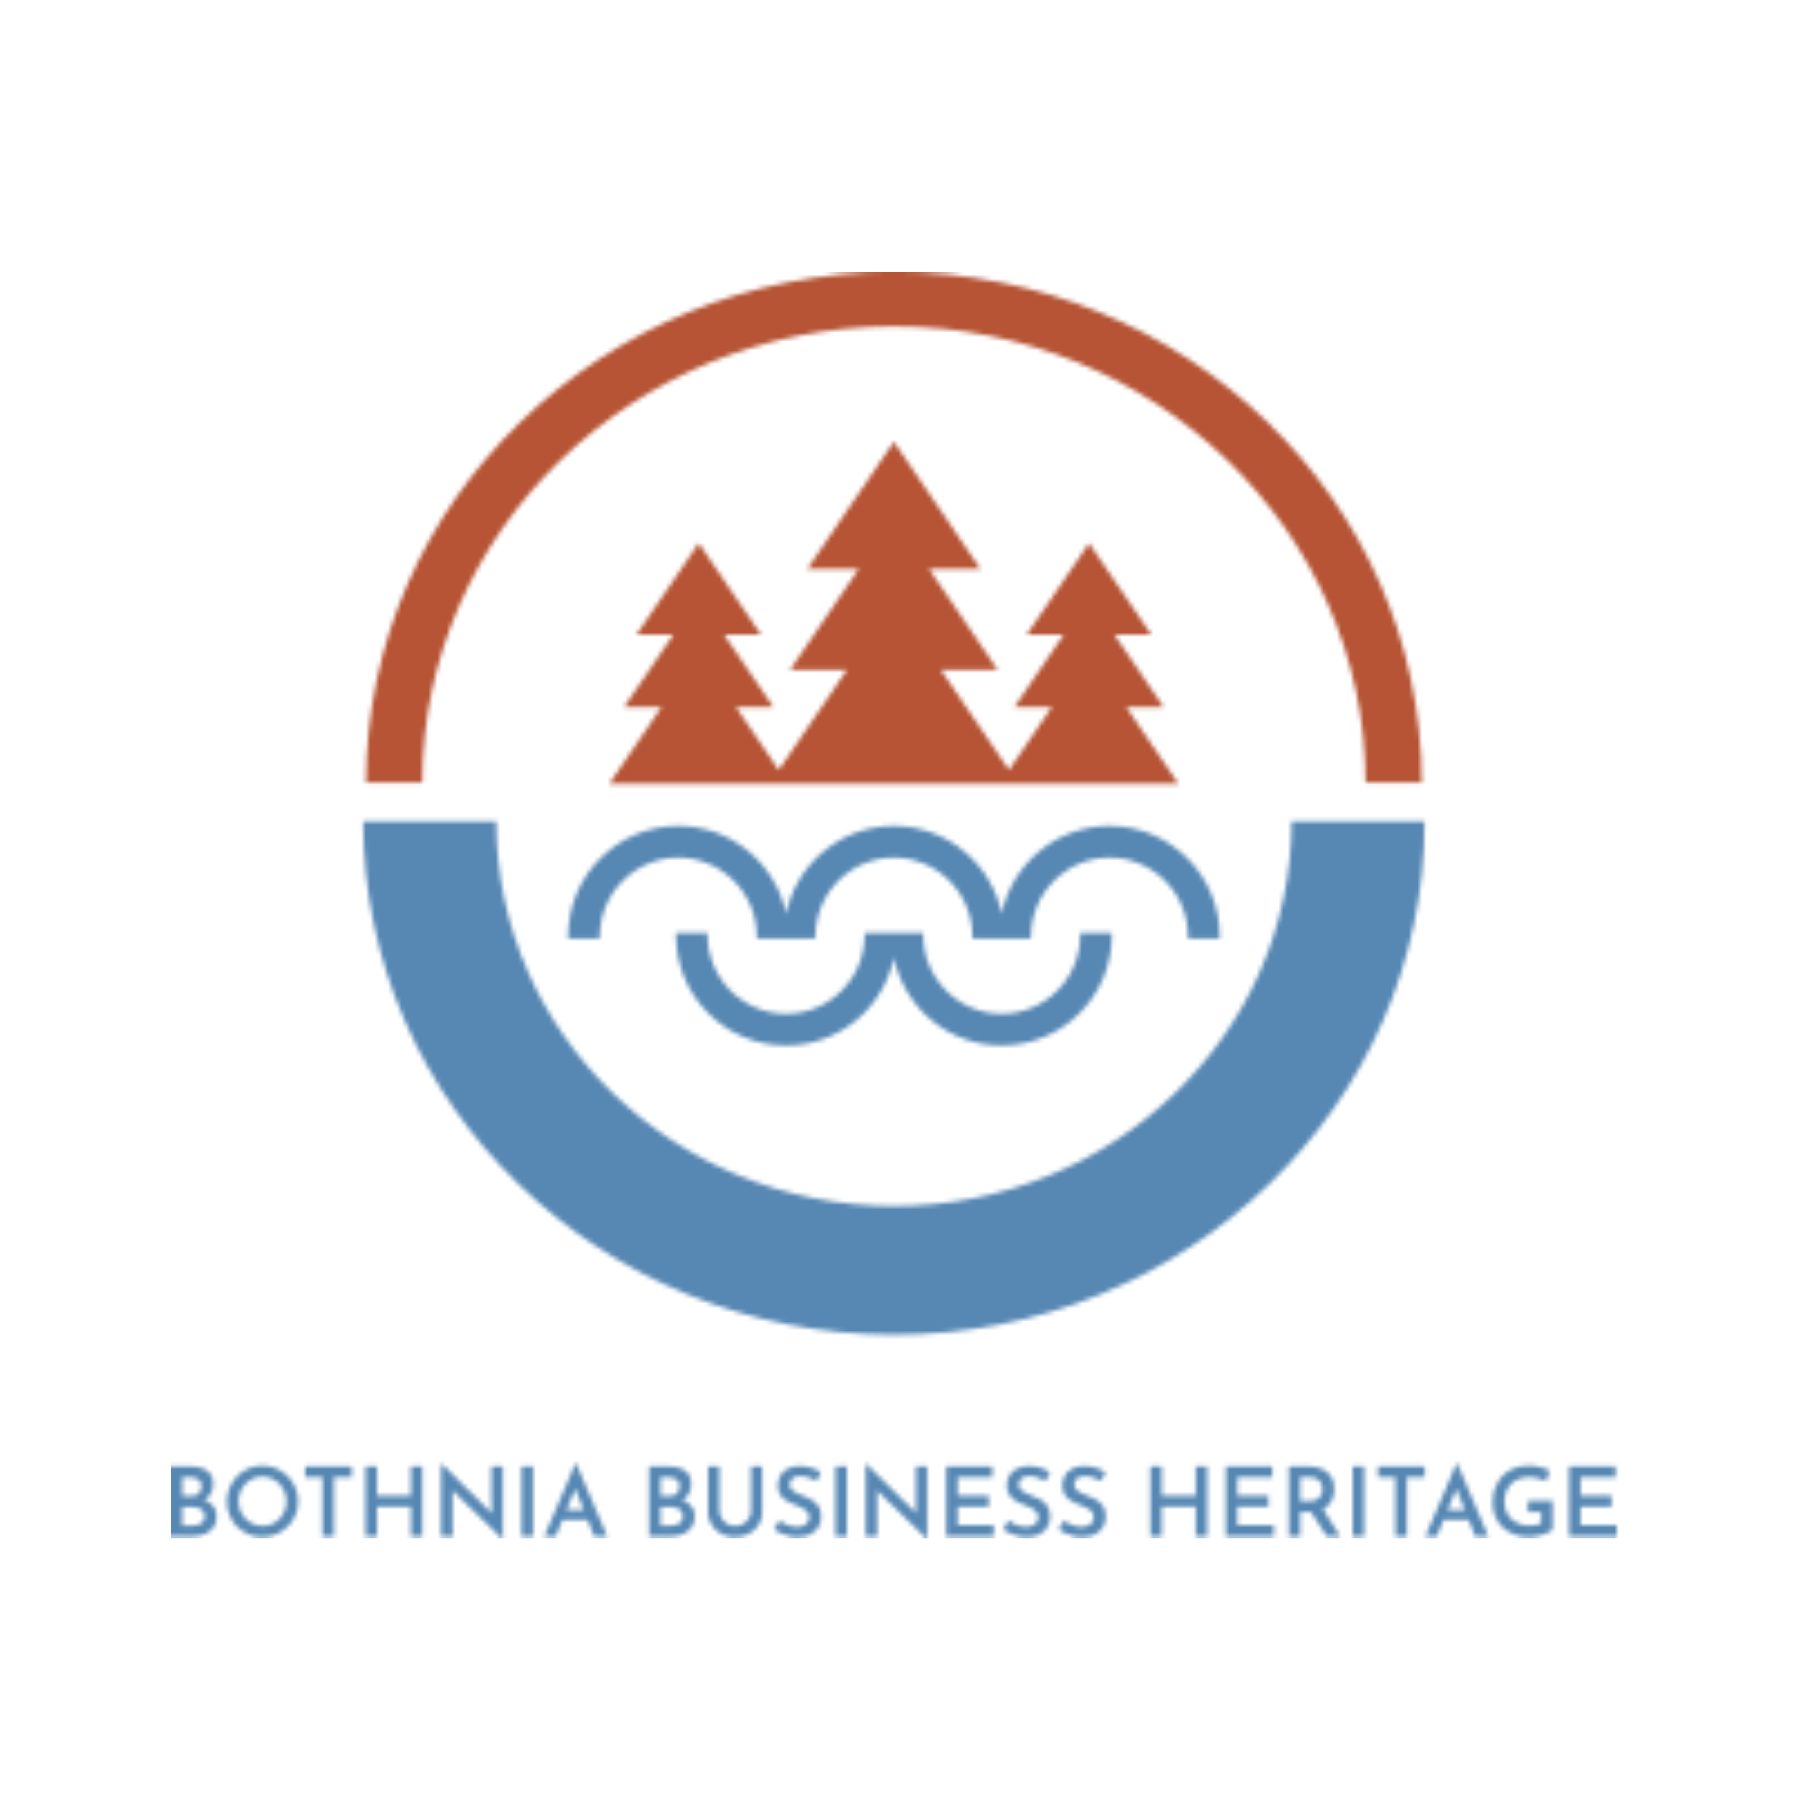 Bothnia Business Heritage Network